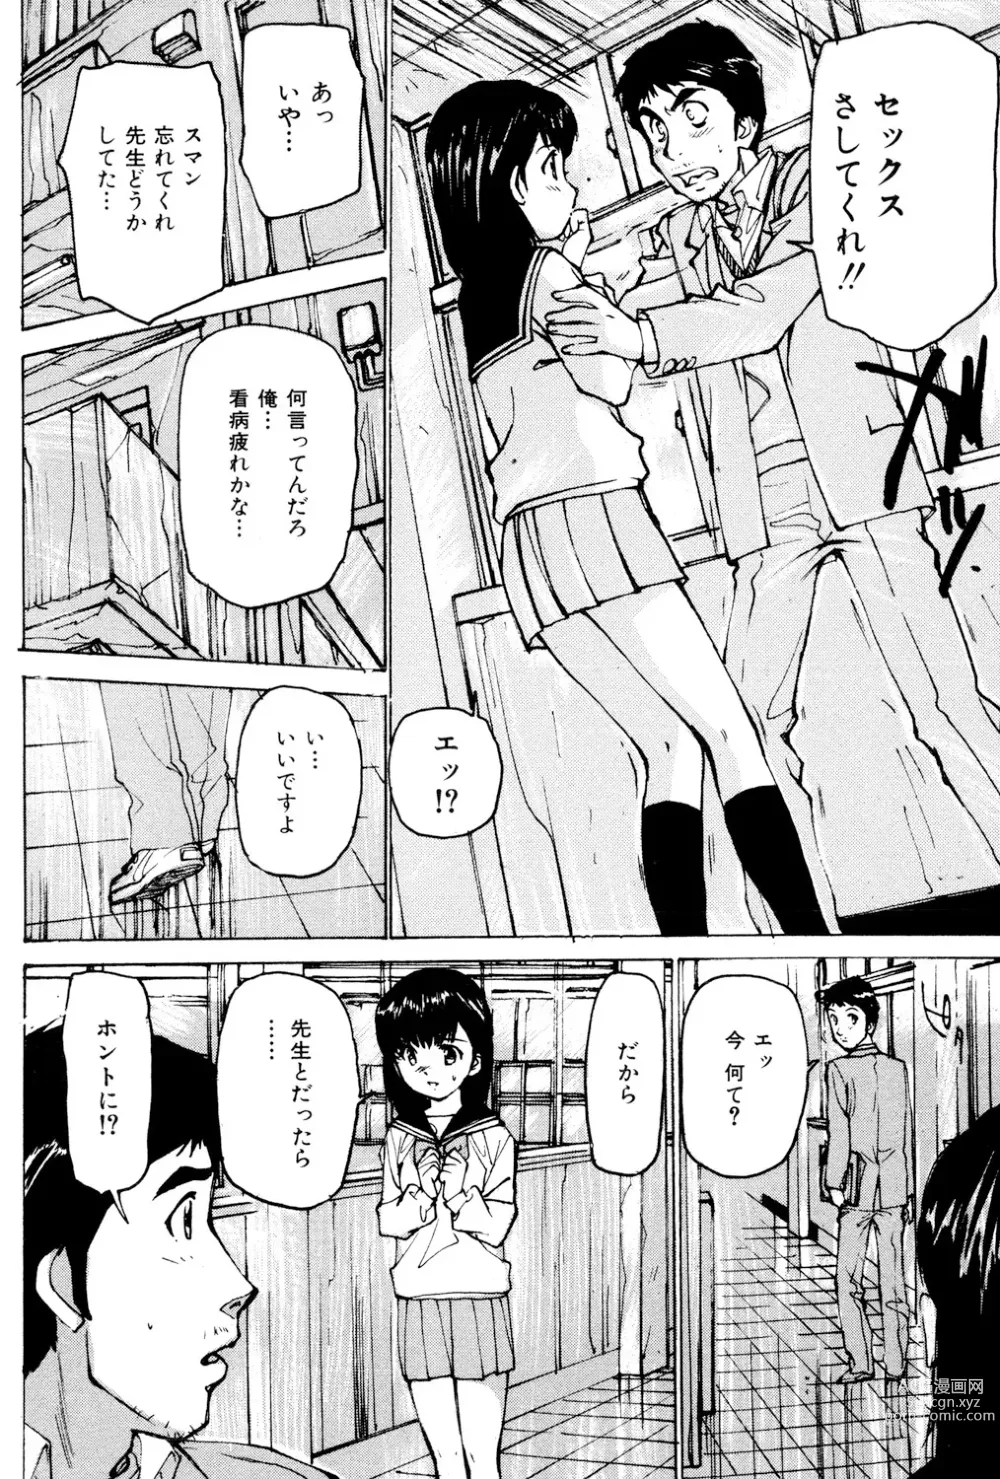 Page 23 of manga Joshikousei Gangu